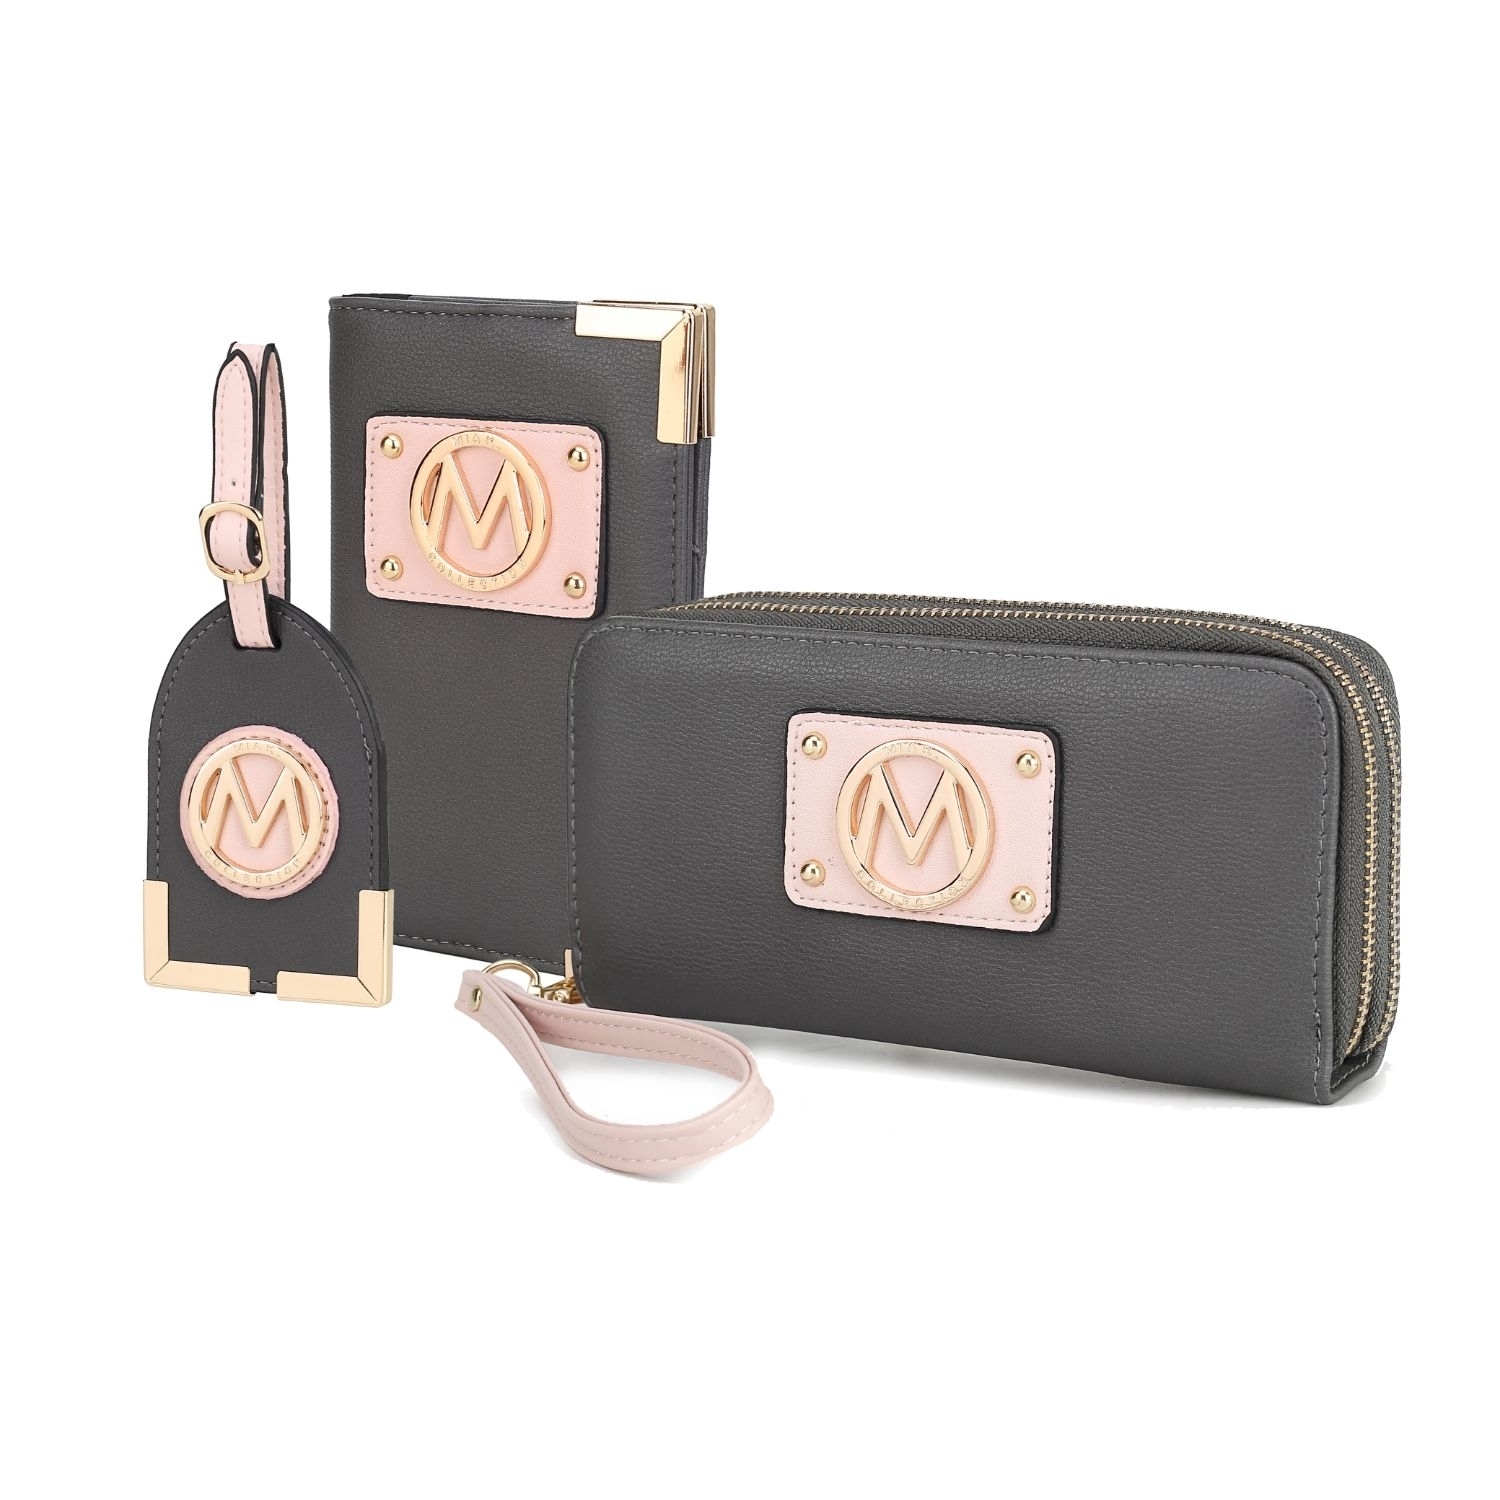 MKF Collection Darla Travel Gift Set Handbag By Mia K 3 Pieces - Charcoal